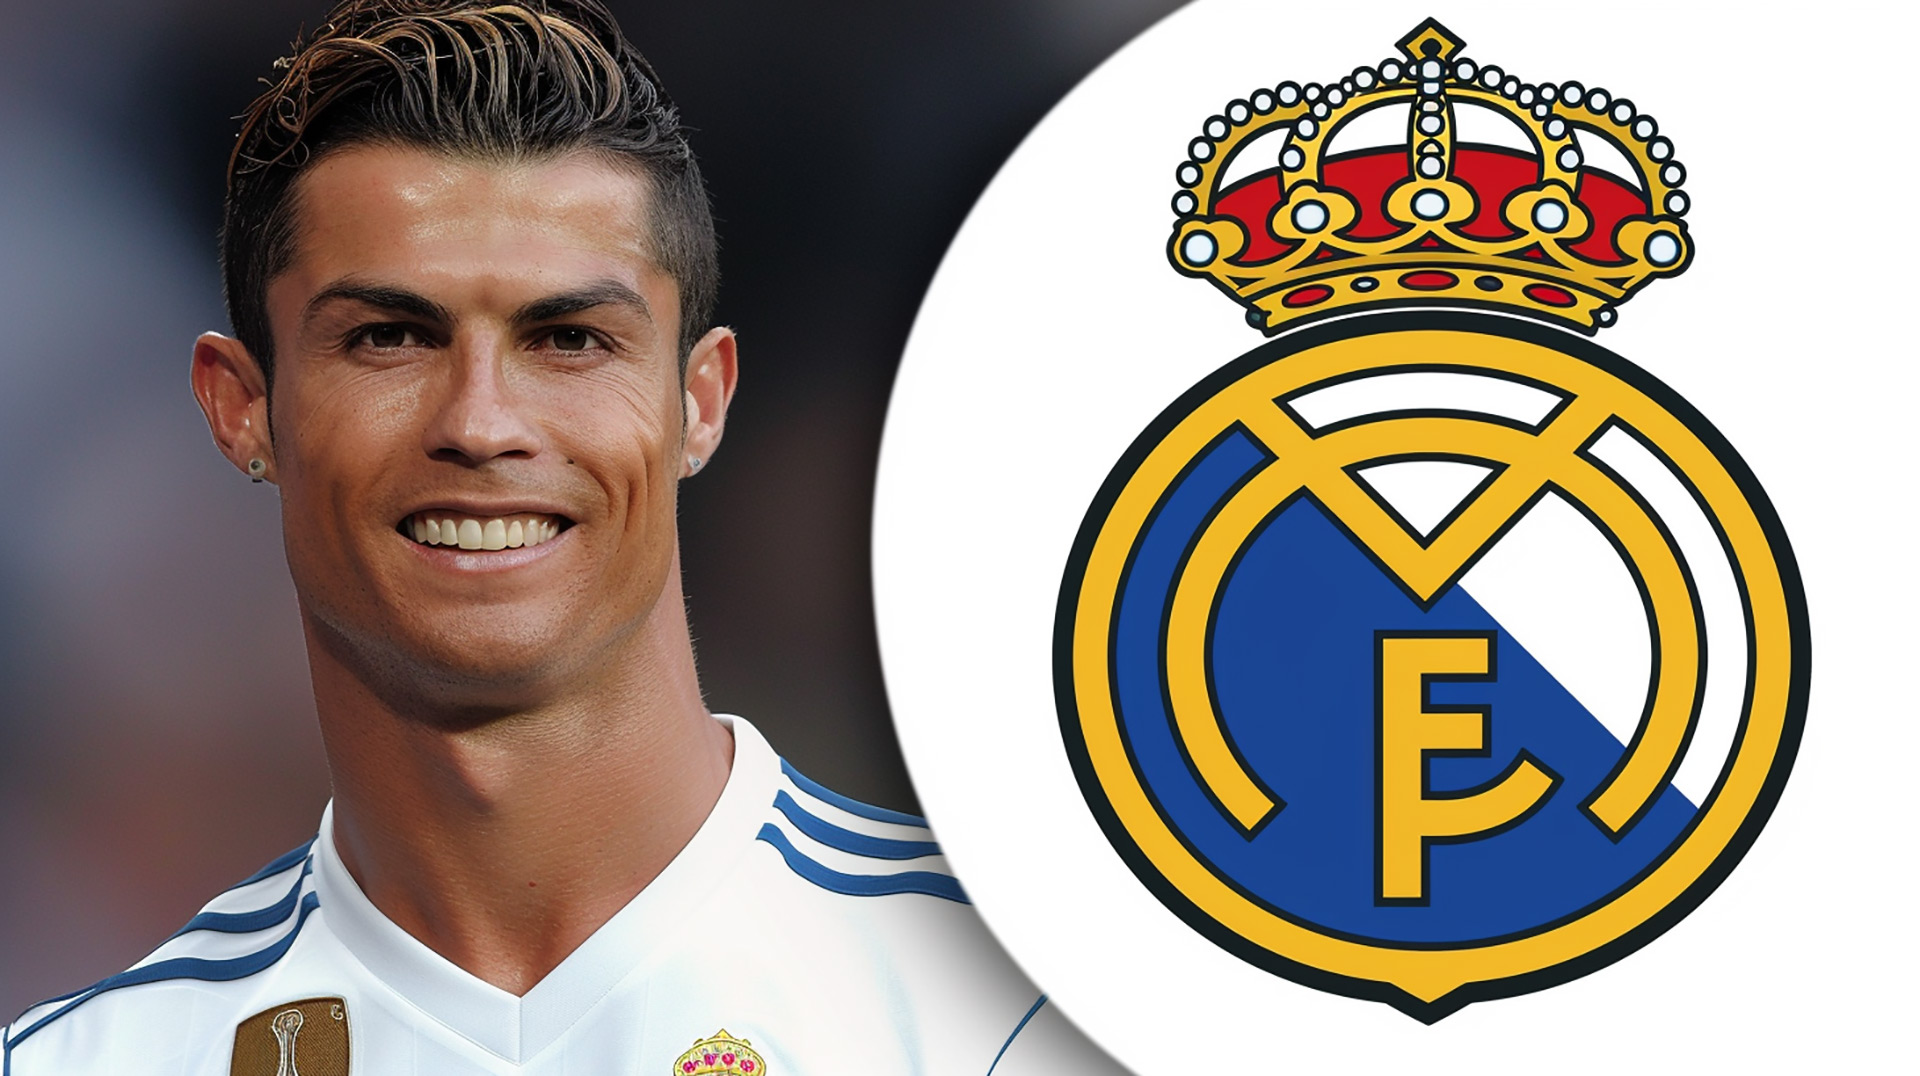 Free Ultra HD Ronaldo Real Madrid Wallpaper Download